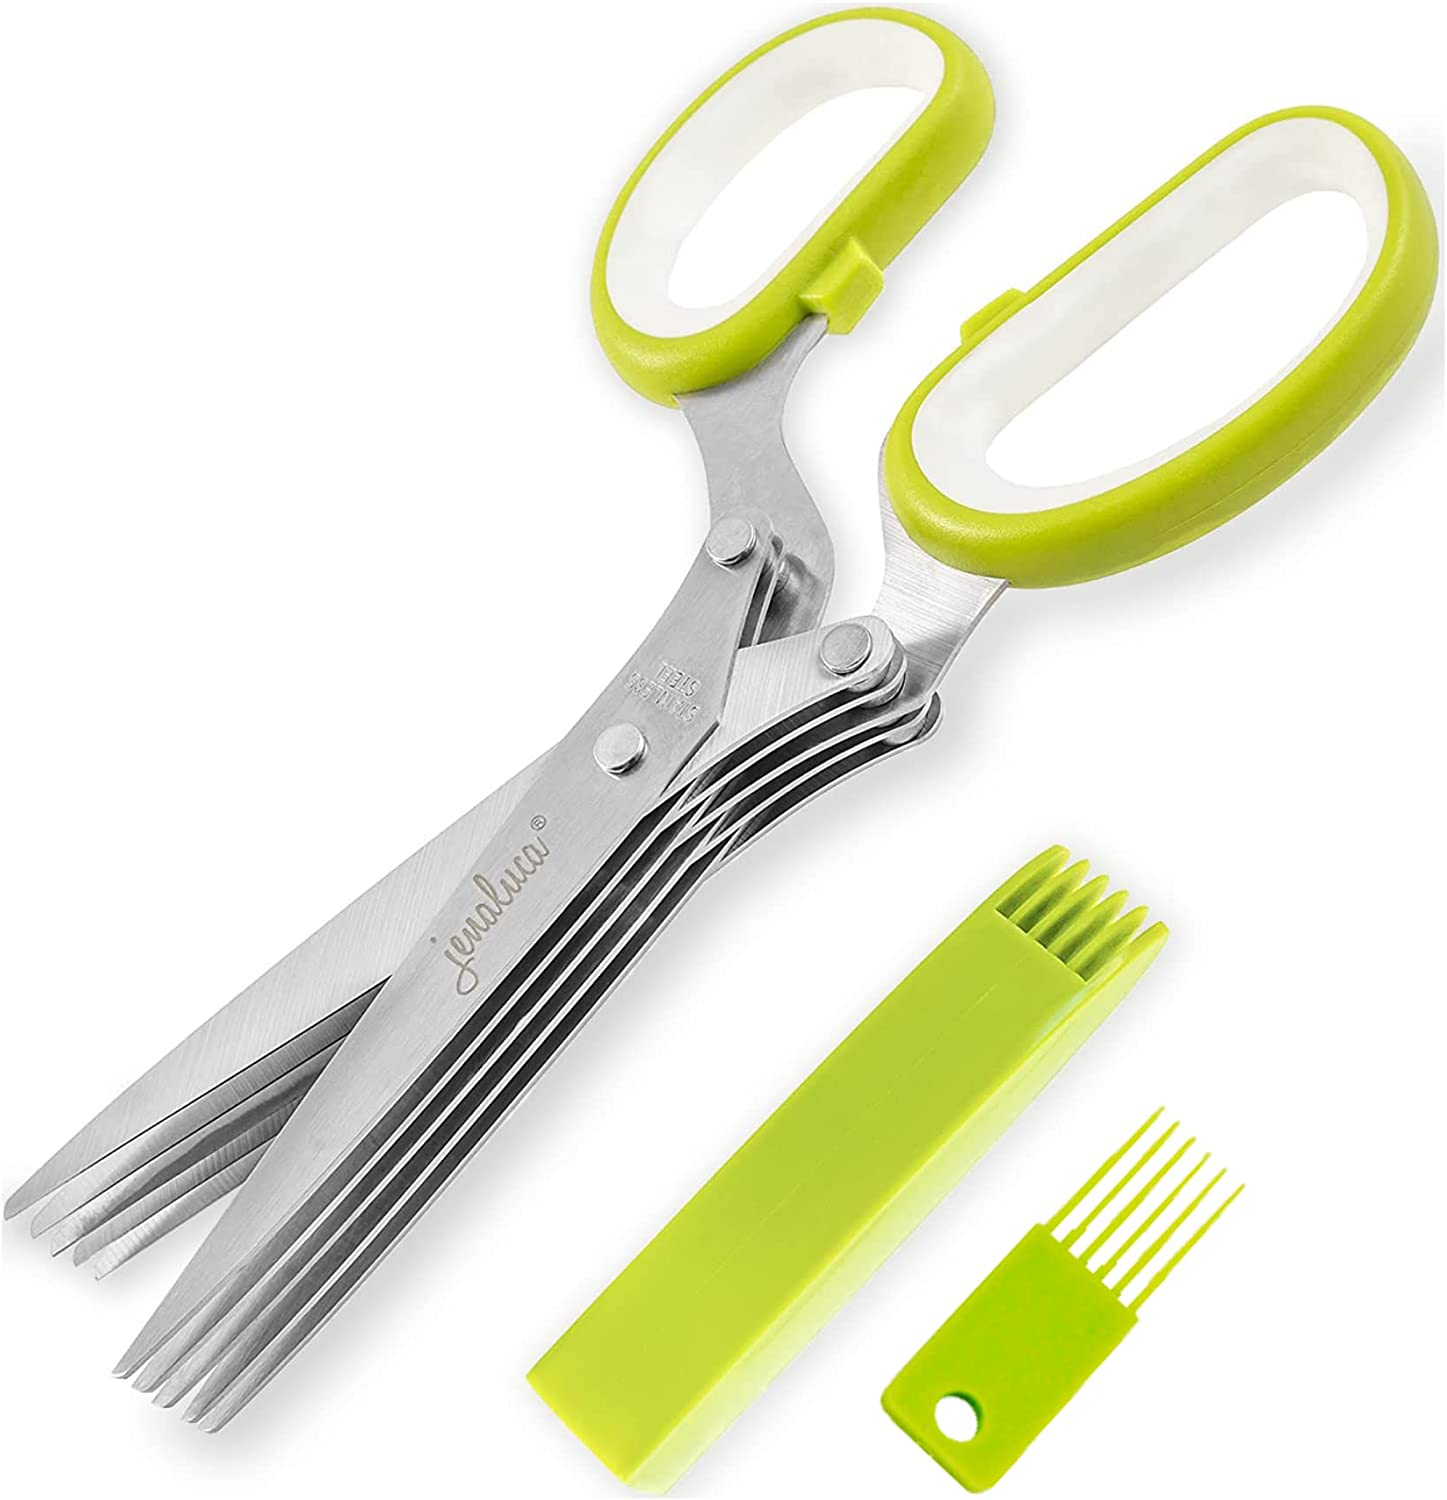 Herb scissors  Affordable kitchen appliances